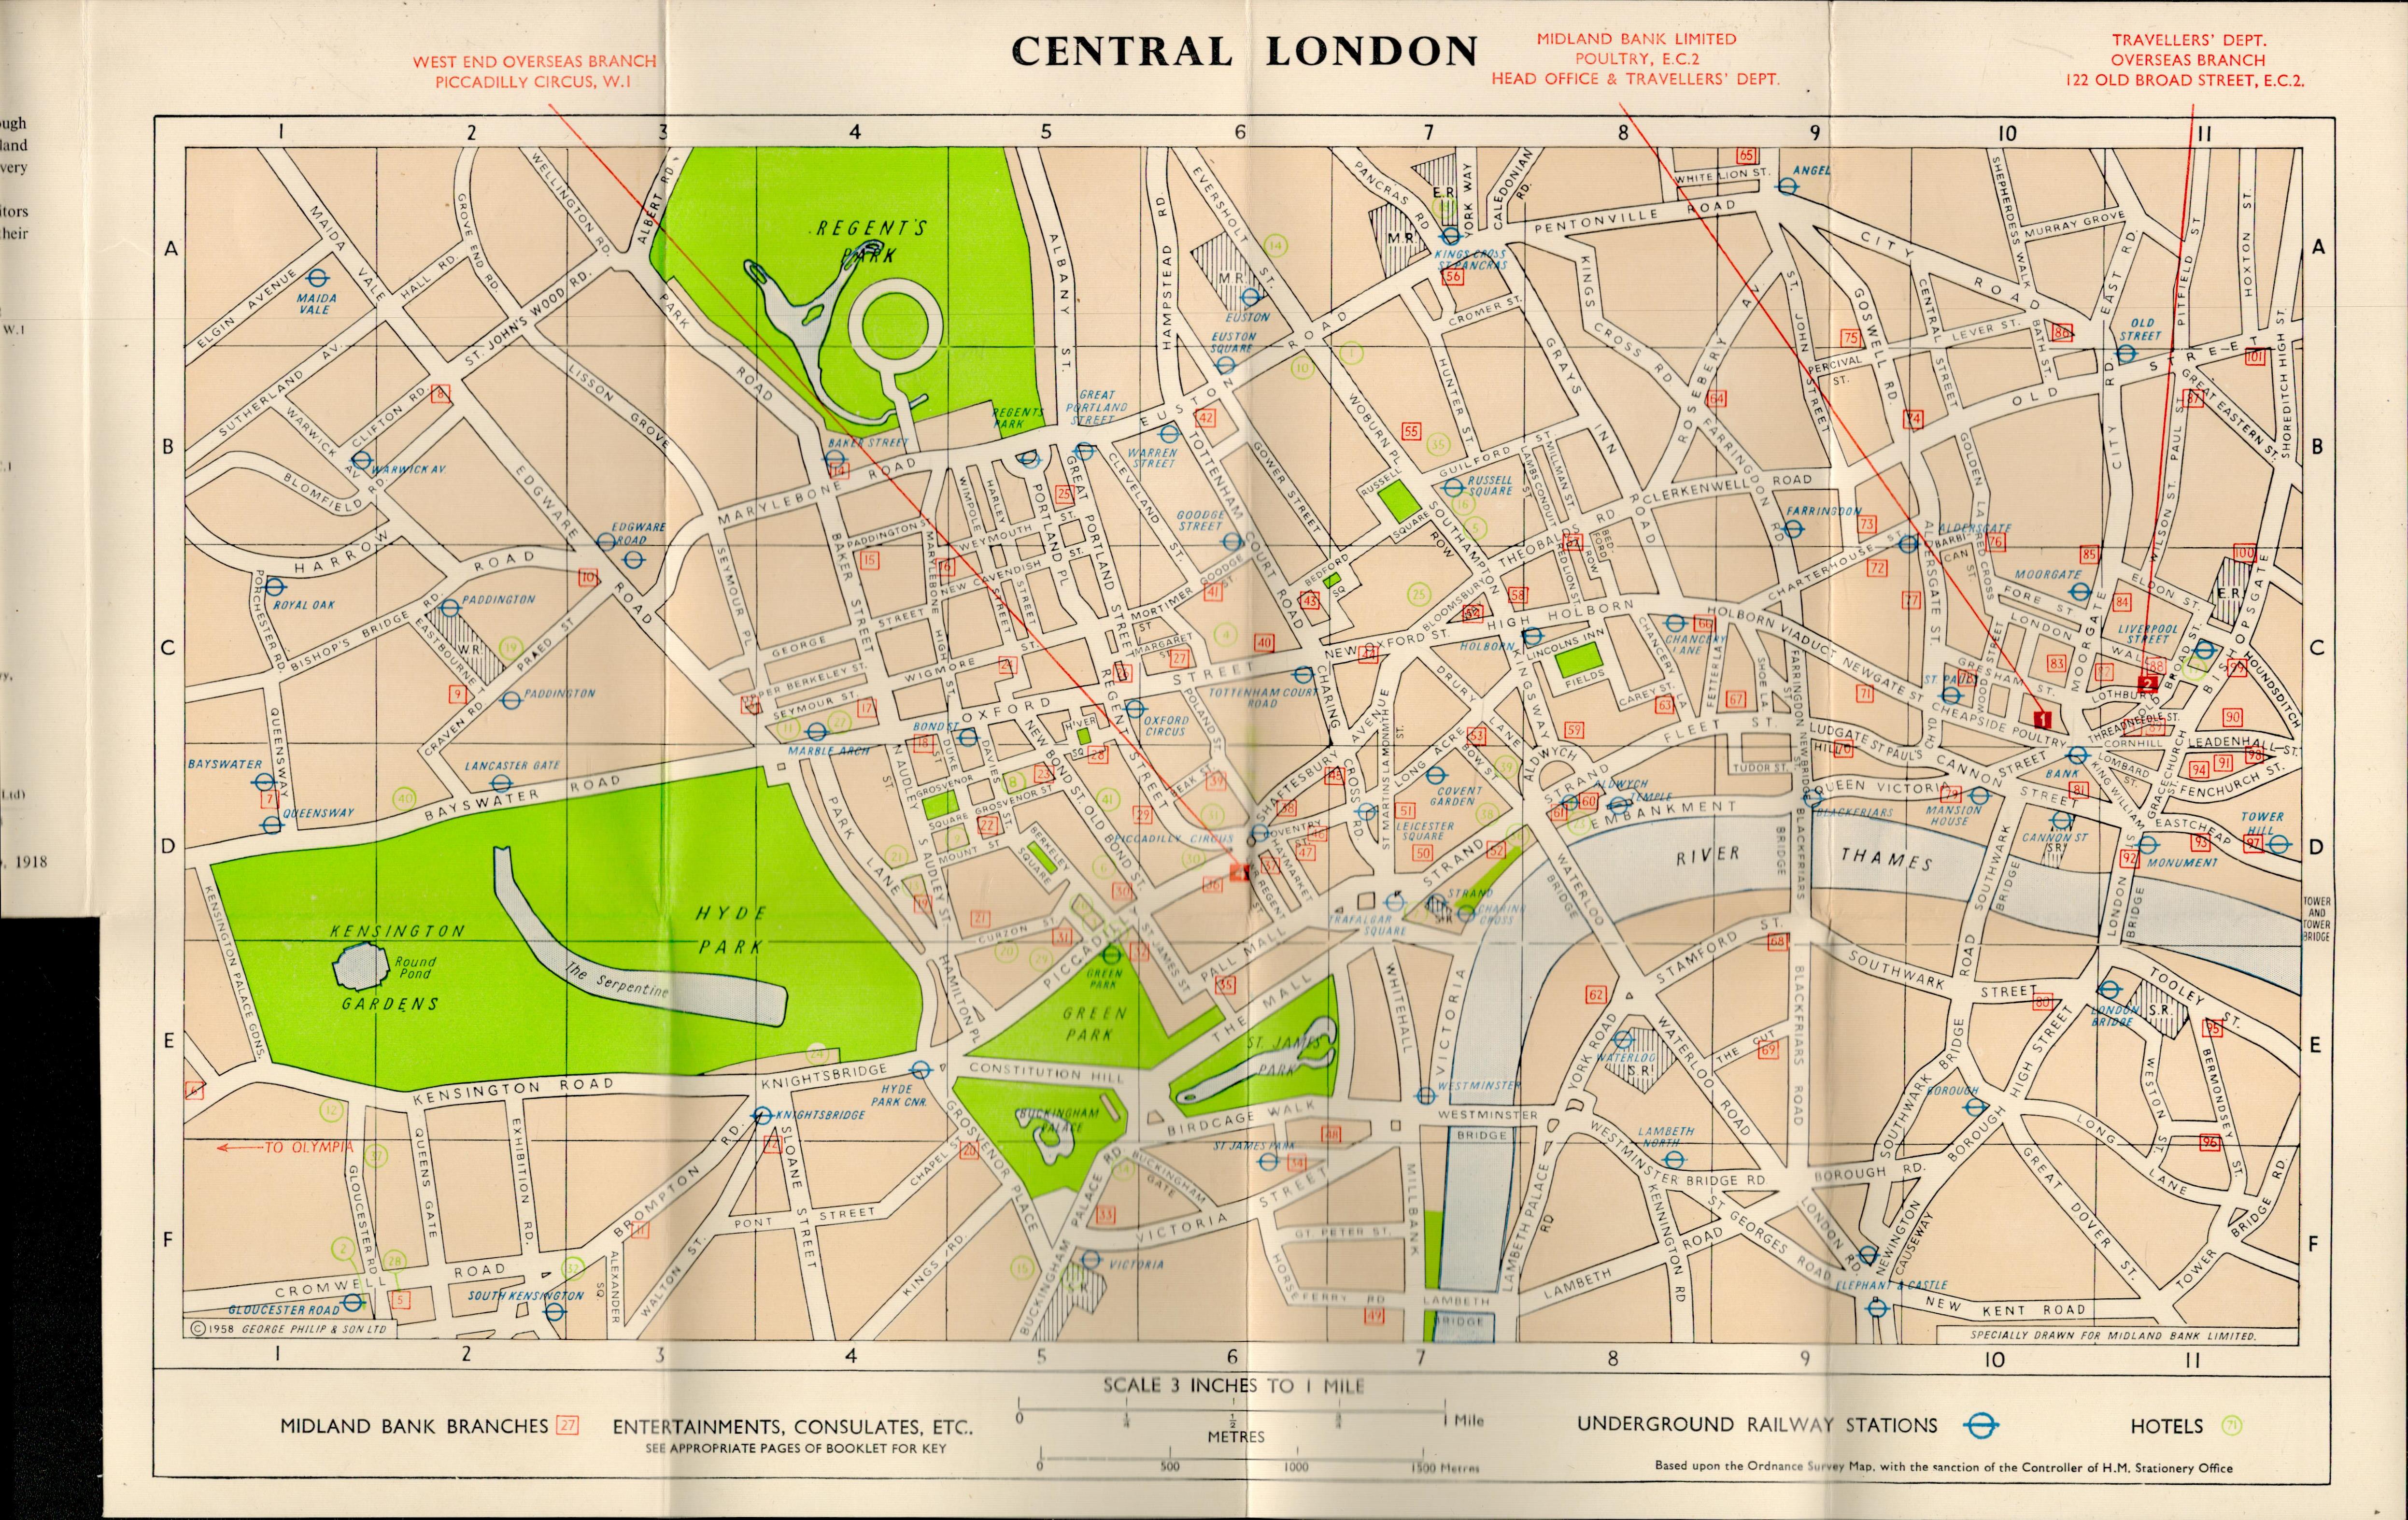 Trafalgar Travel Ltd Midland Bank Map of Central London Circa 1959. Folded map in publisher's slip